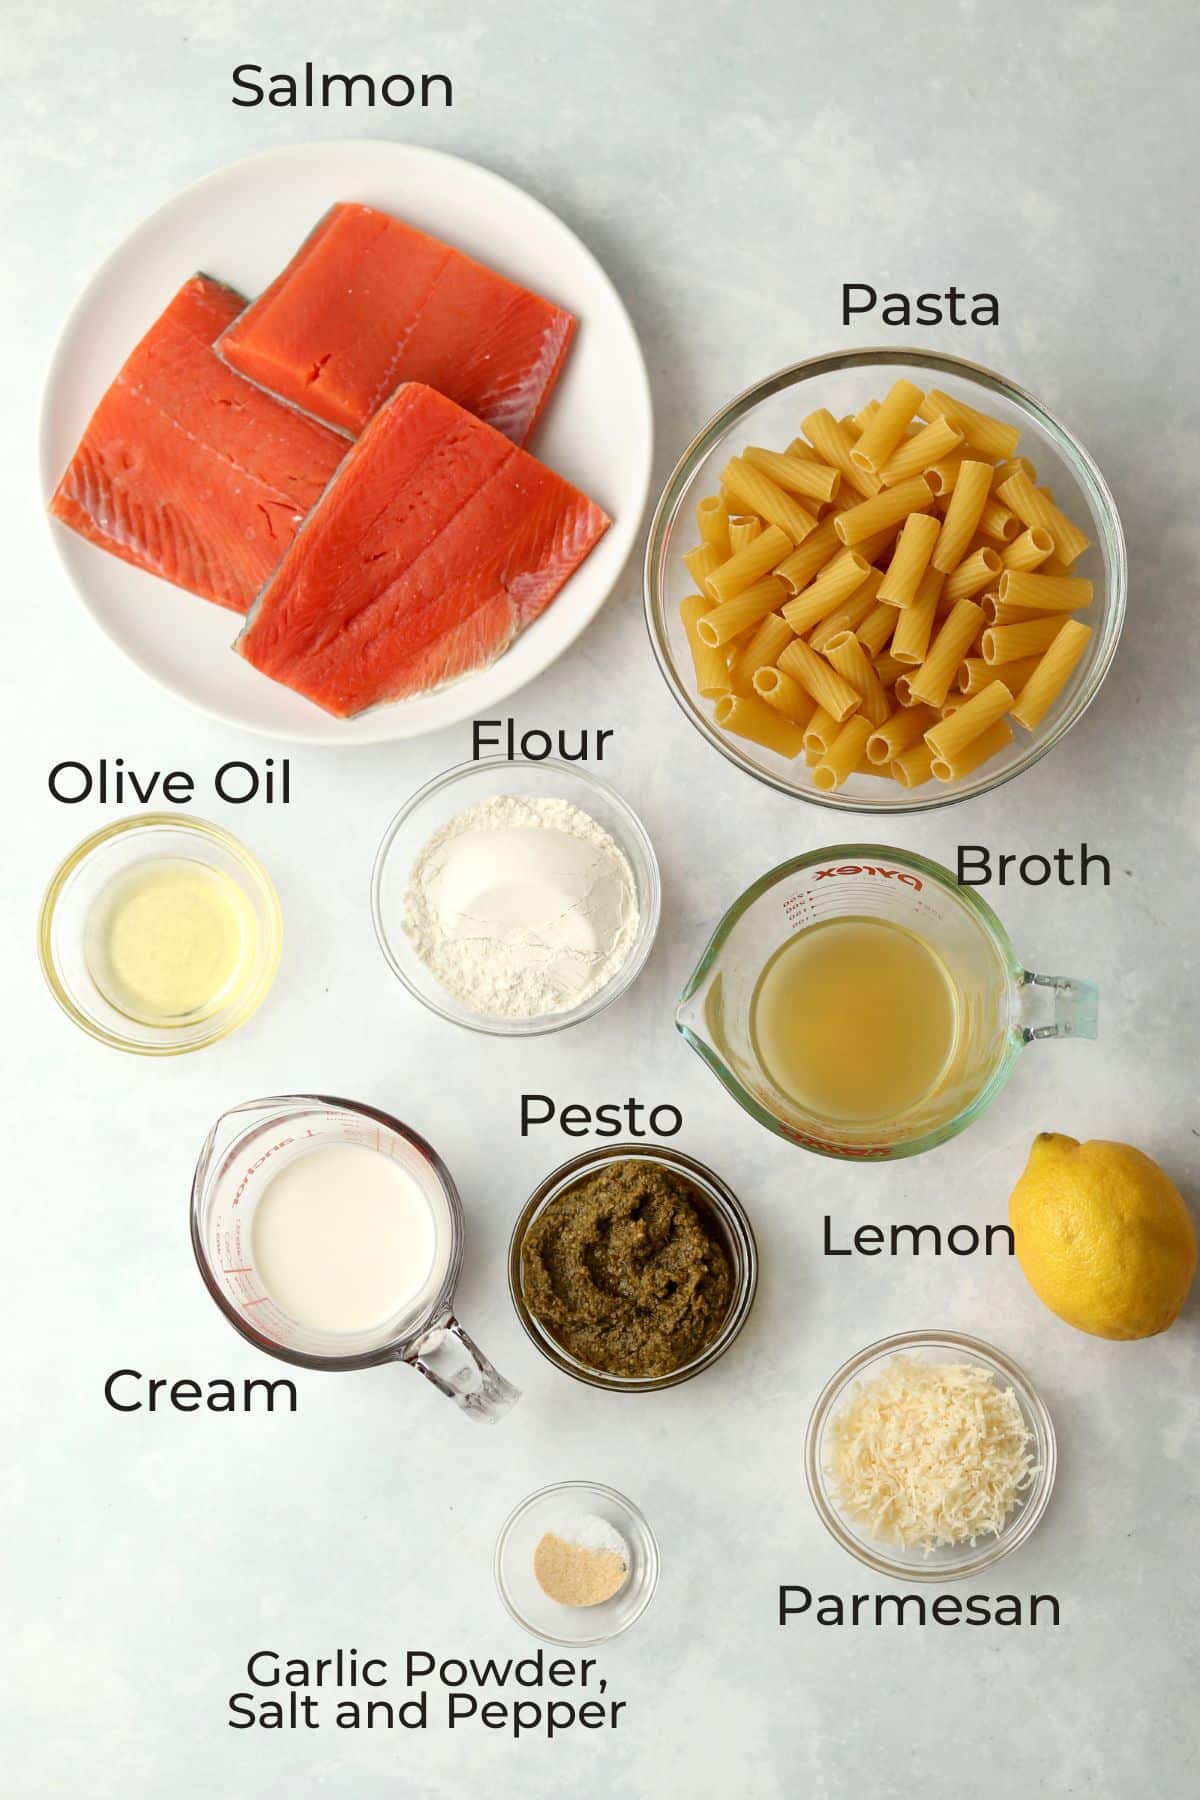 salmon, pasta, flour, broth, oil, pesto, cream, parmesan, lemon, and spices in glass prep bowls